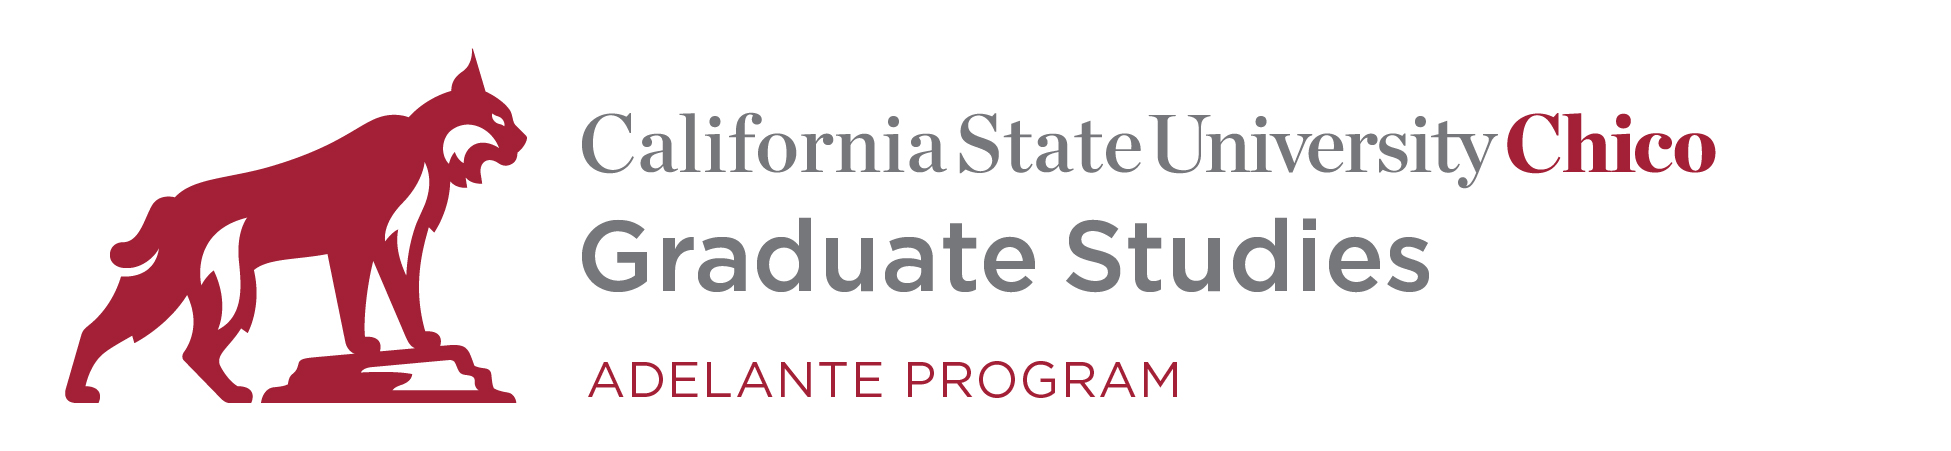 Program logo for Graduate Studies Adelante Program with Chico State Wildcat